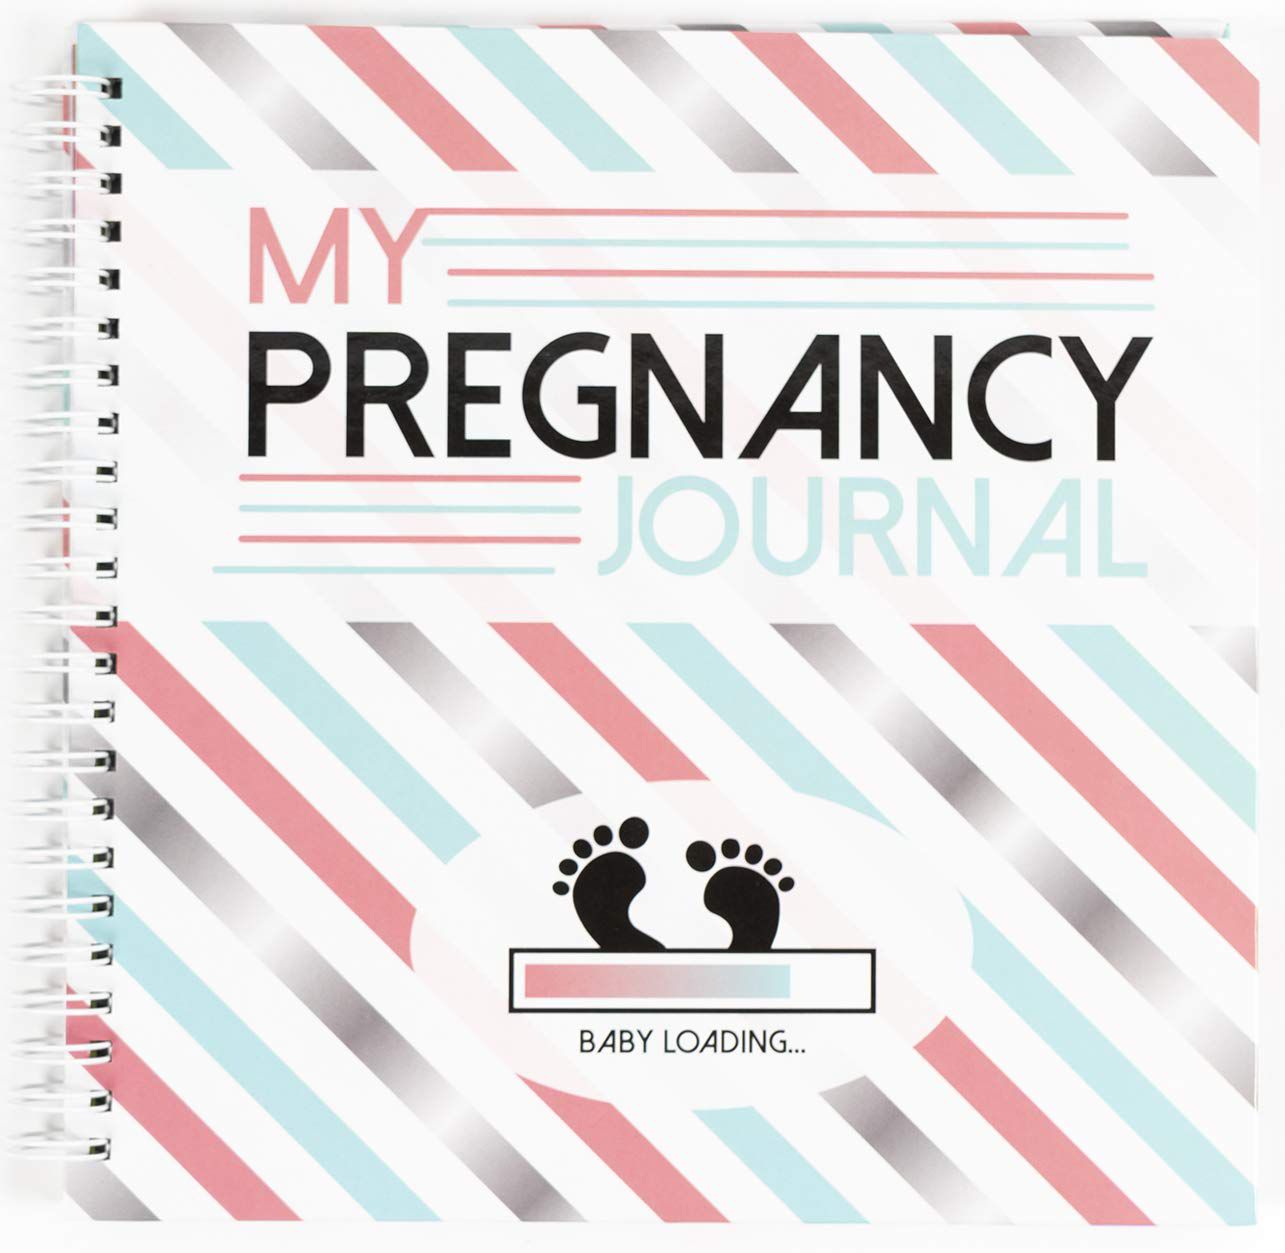 A Pregnancy Journal